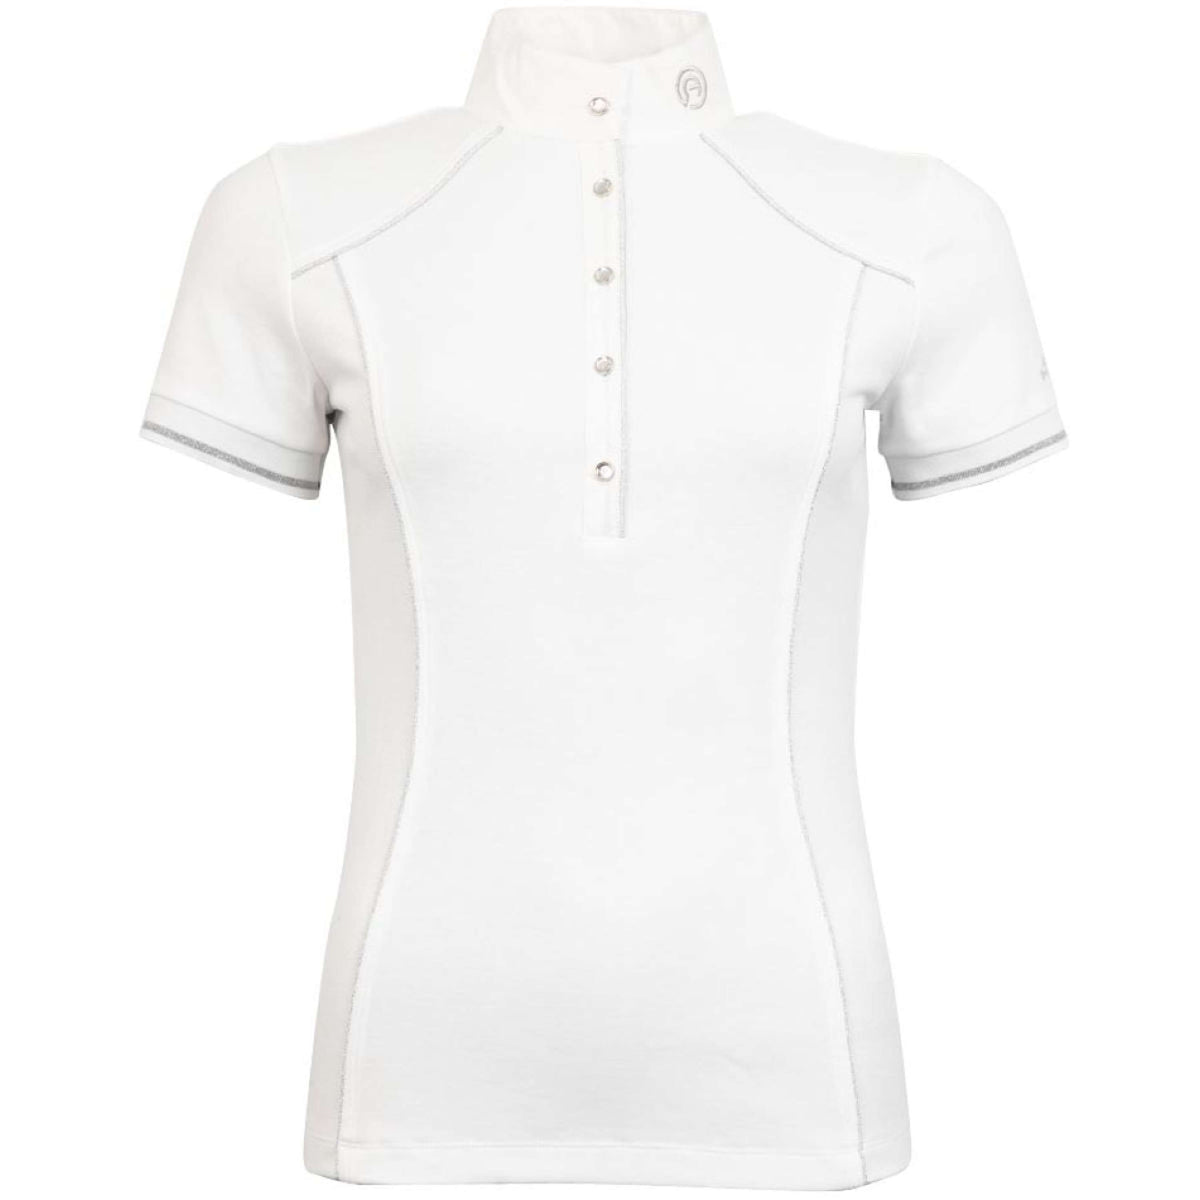 Anky Turniershirt Subtle C-Wear Weiß